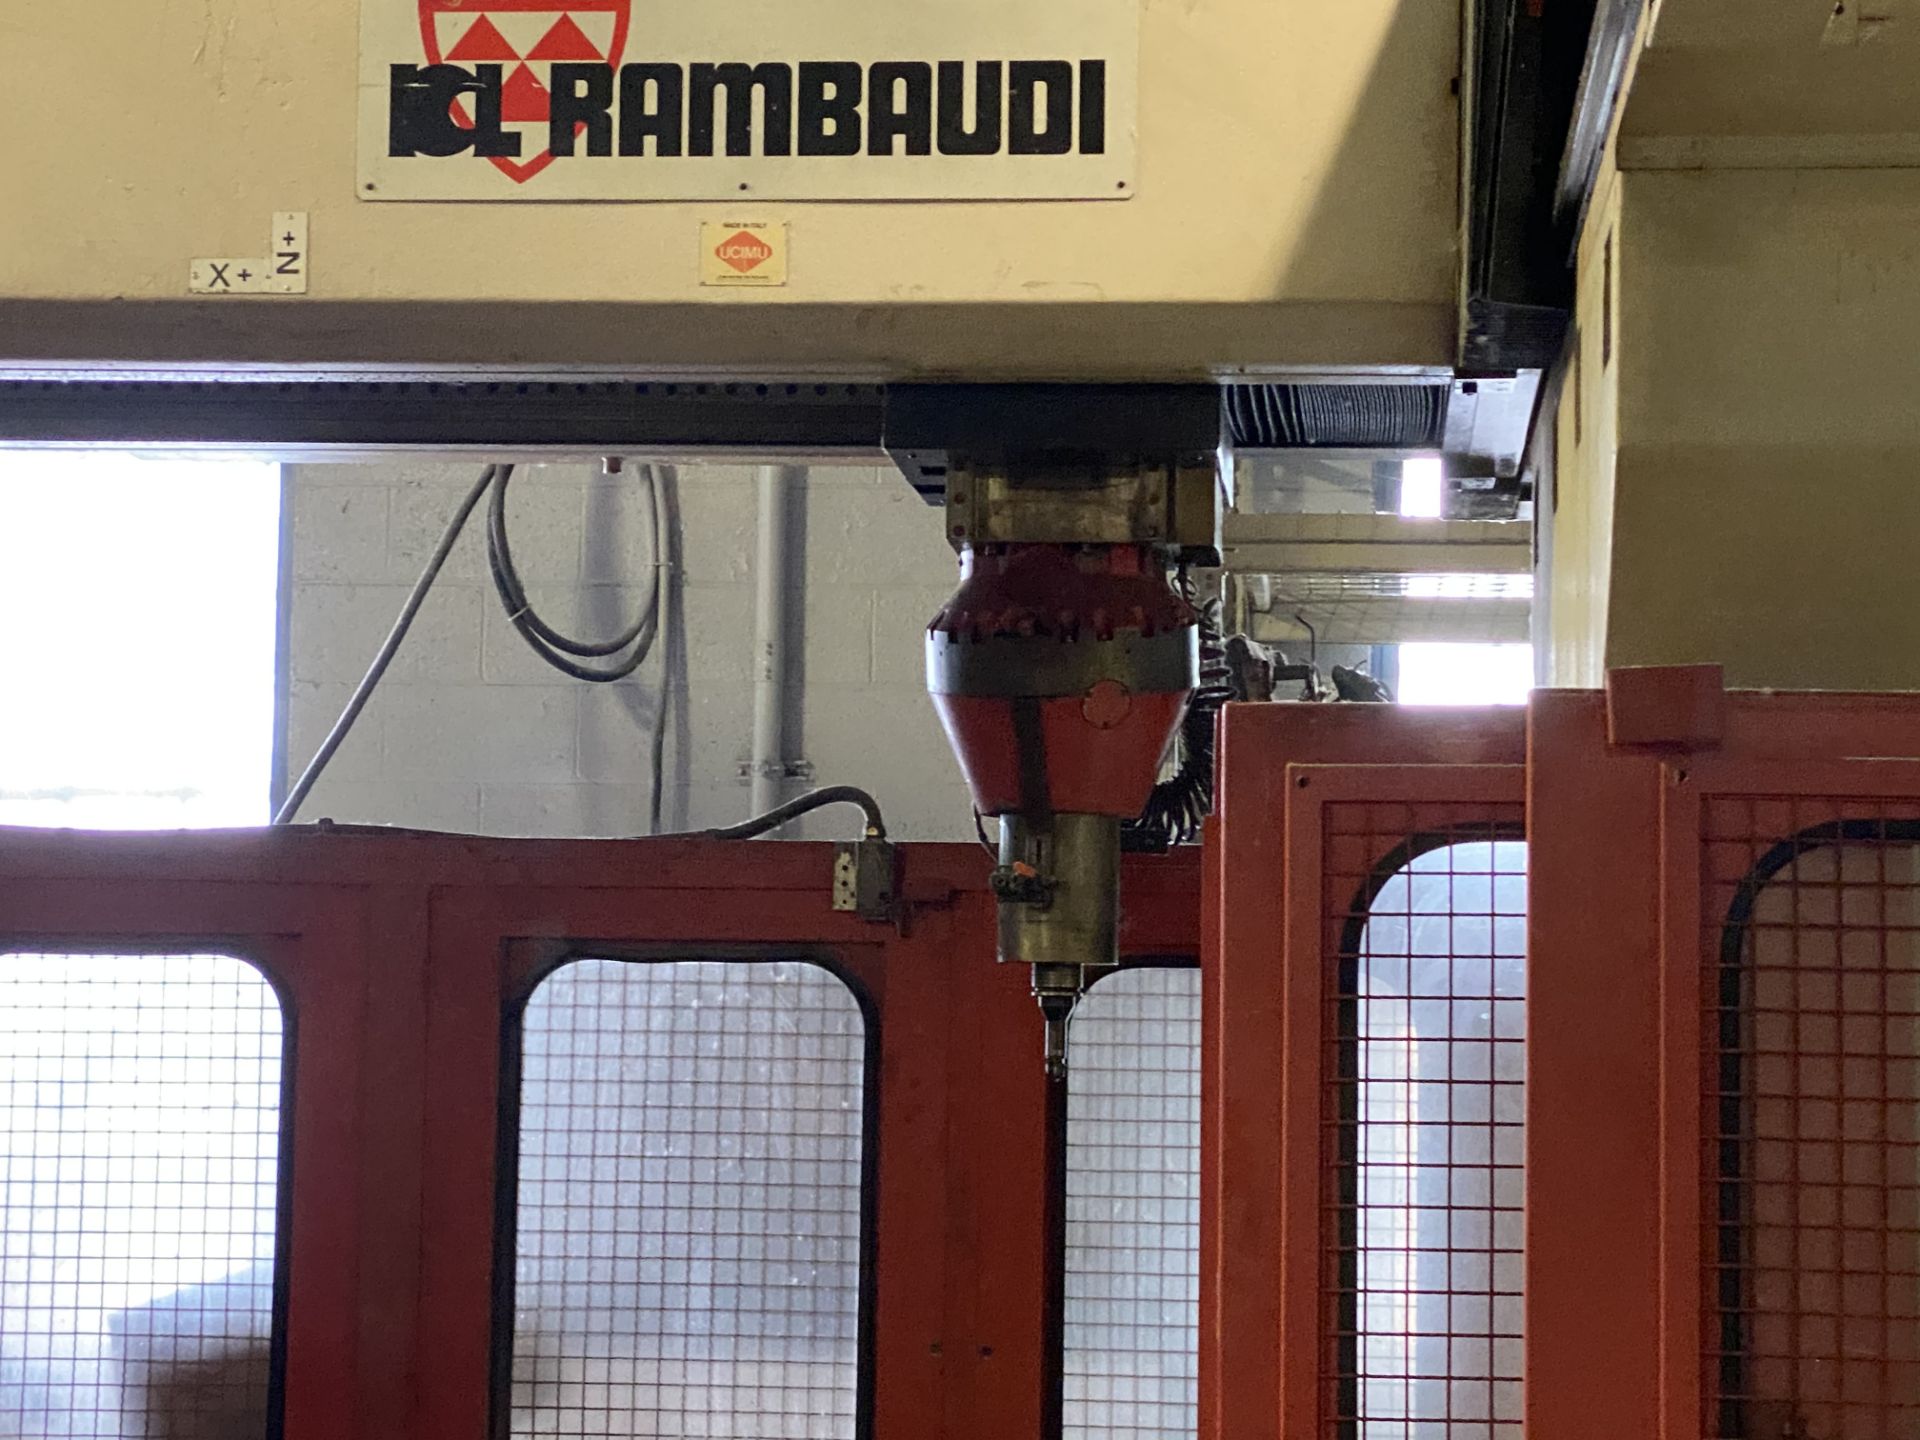 78"X x 59"Y Rambaudi CNC Milling Machine - Image 6 of 11